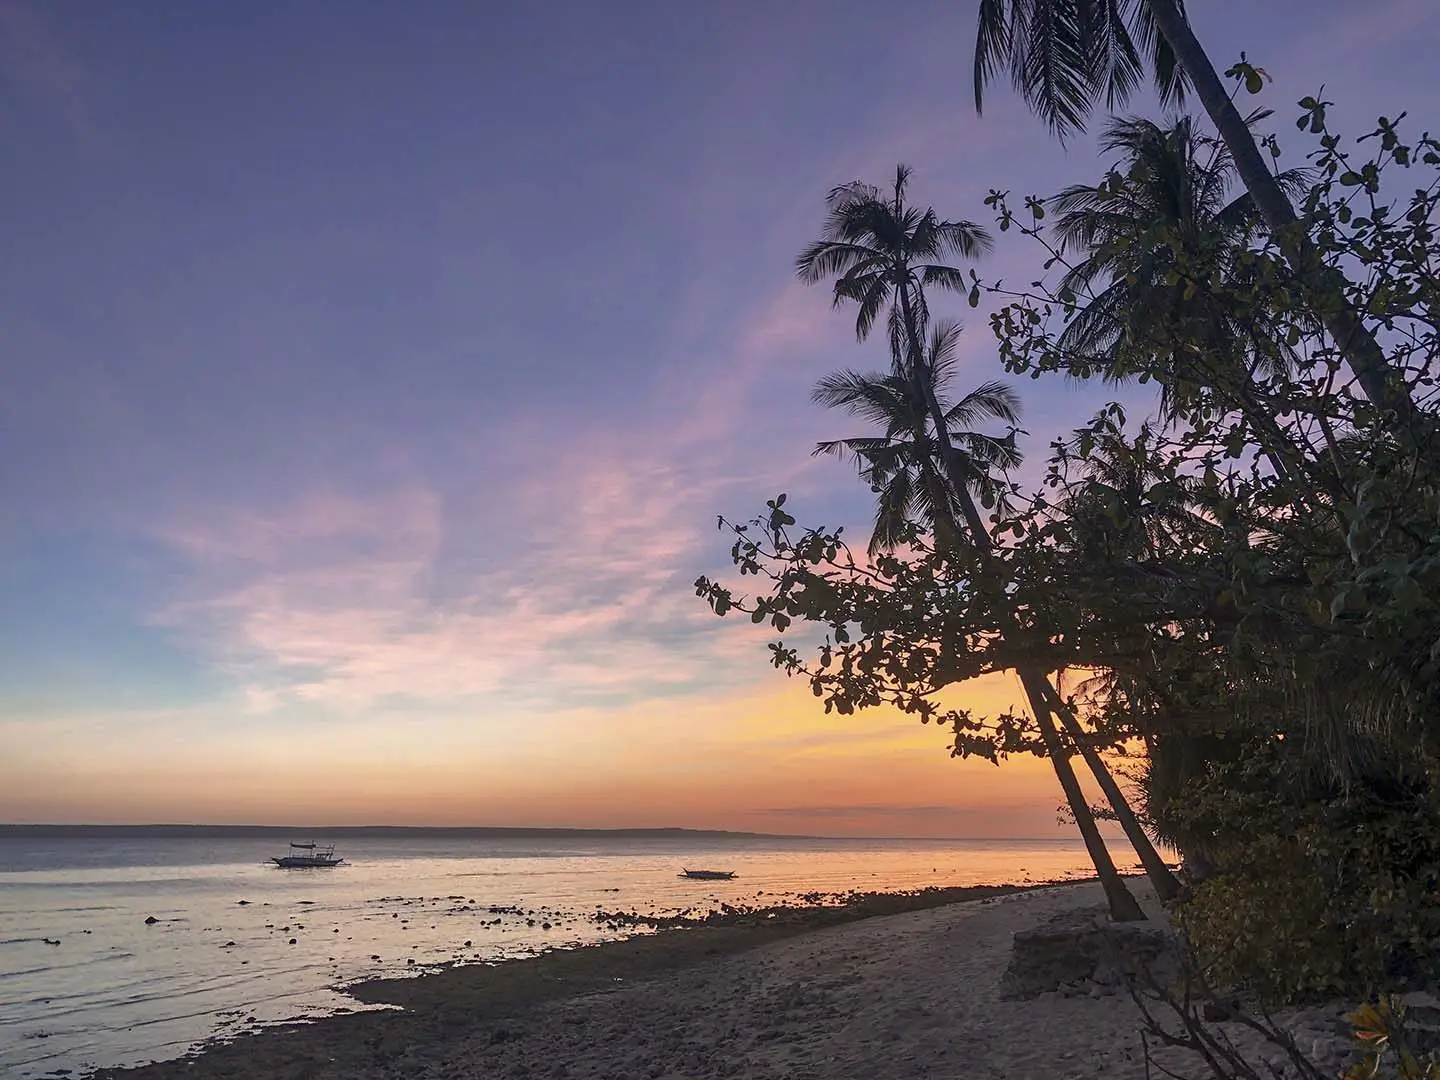 Sunset at Caluya Island, Antique